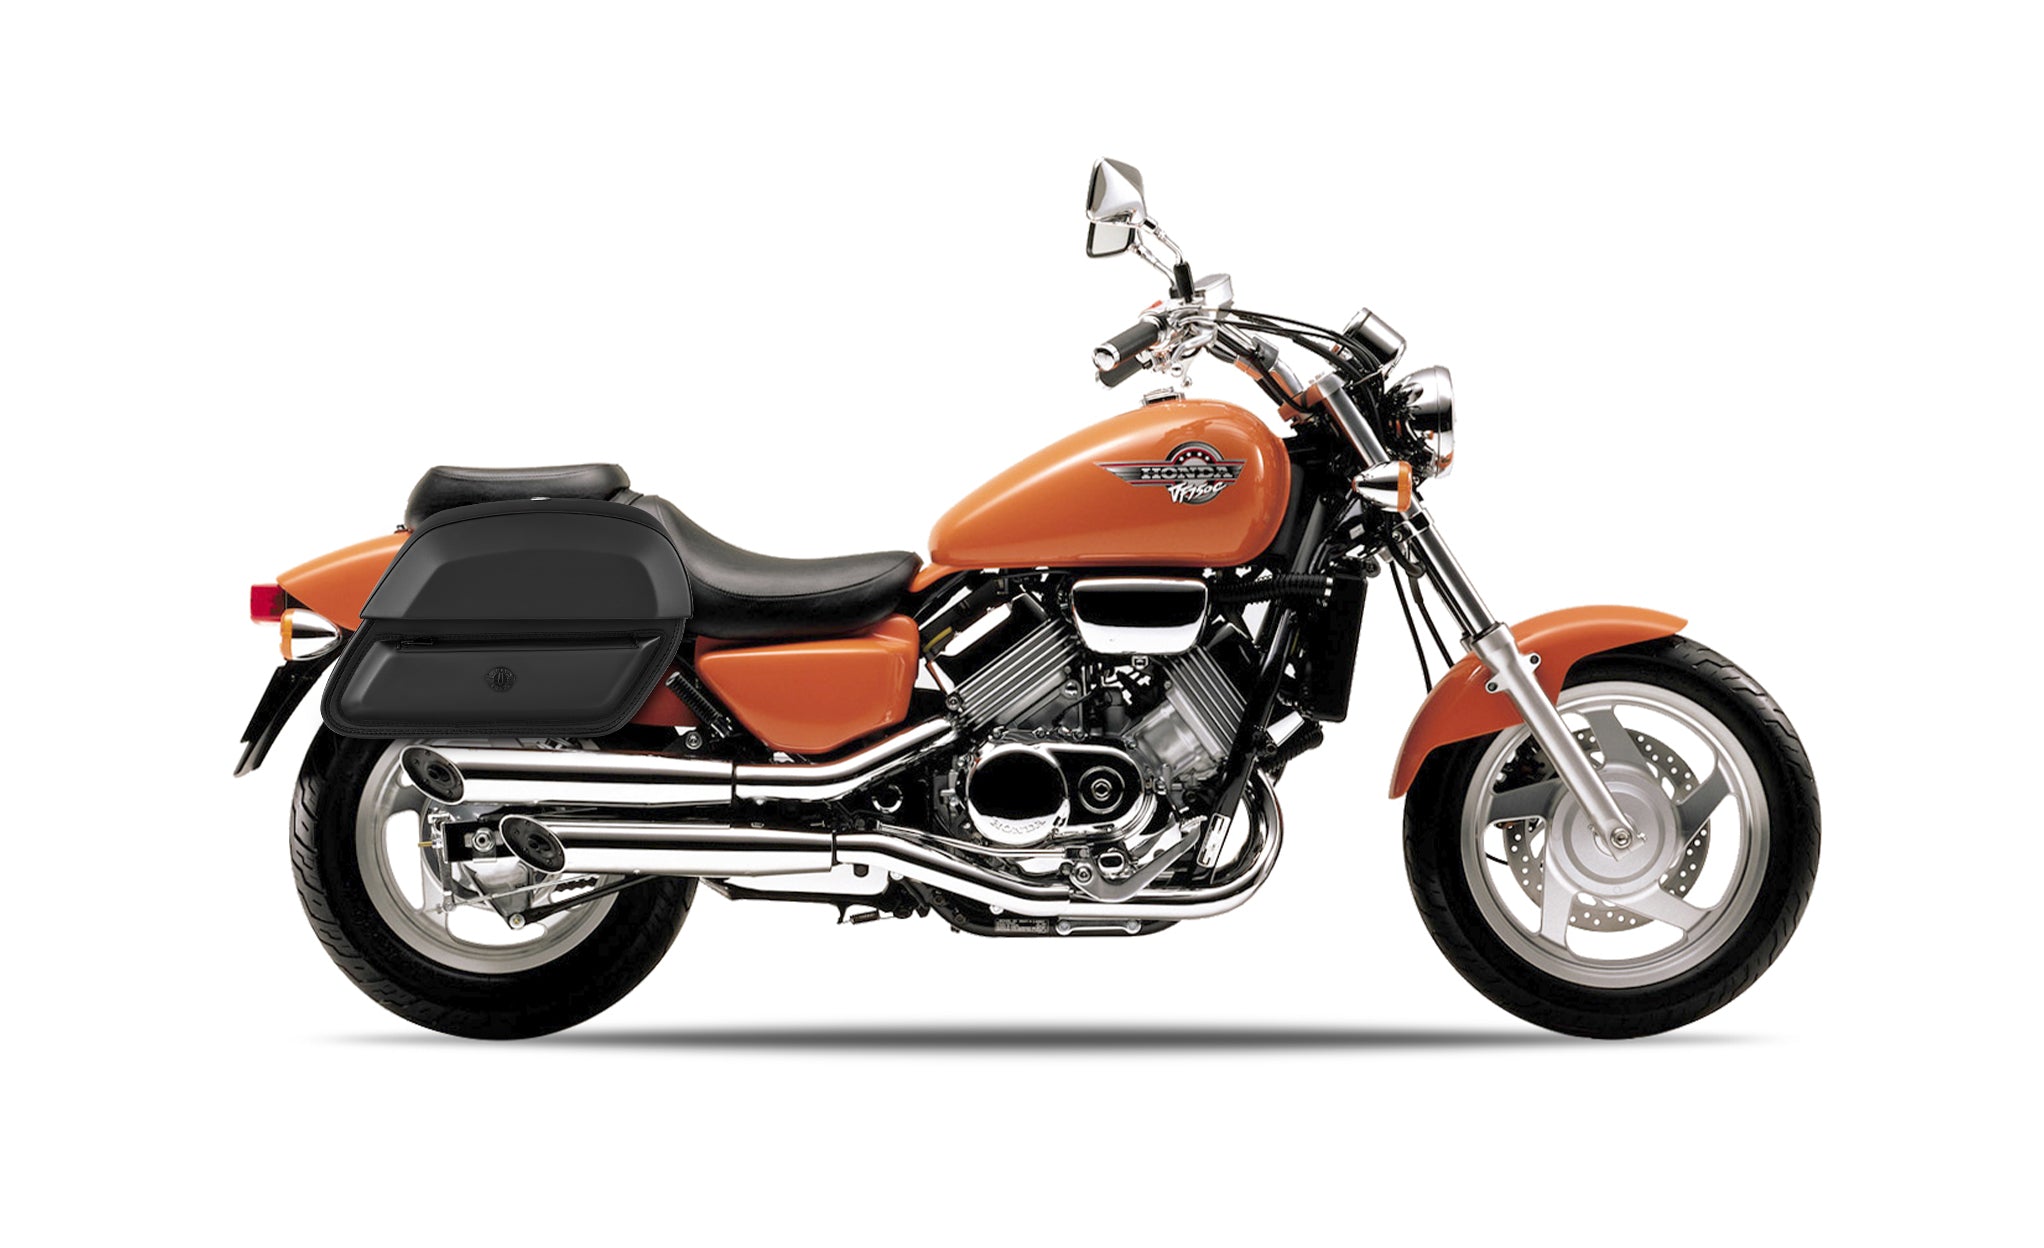 28L - Wraith Medium Magna 750 VF750C Leather Motorcycle Saddlebags BAG on Bike View @expand